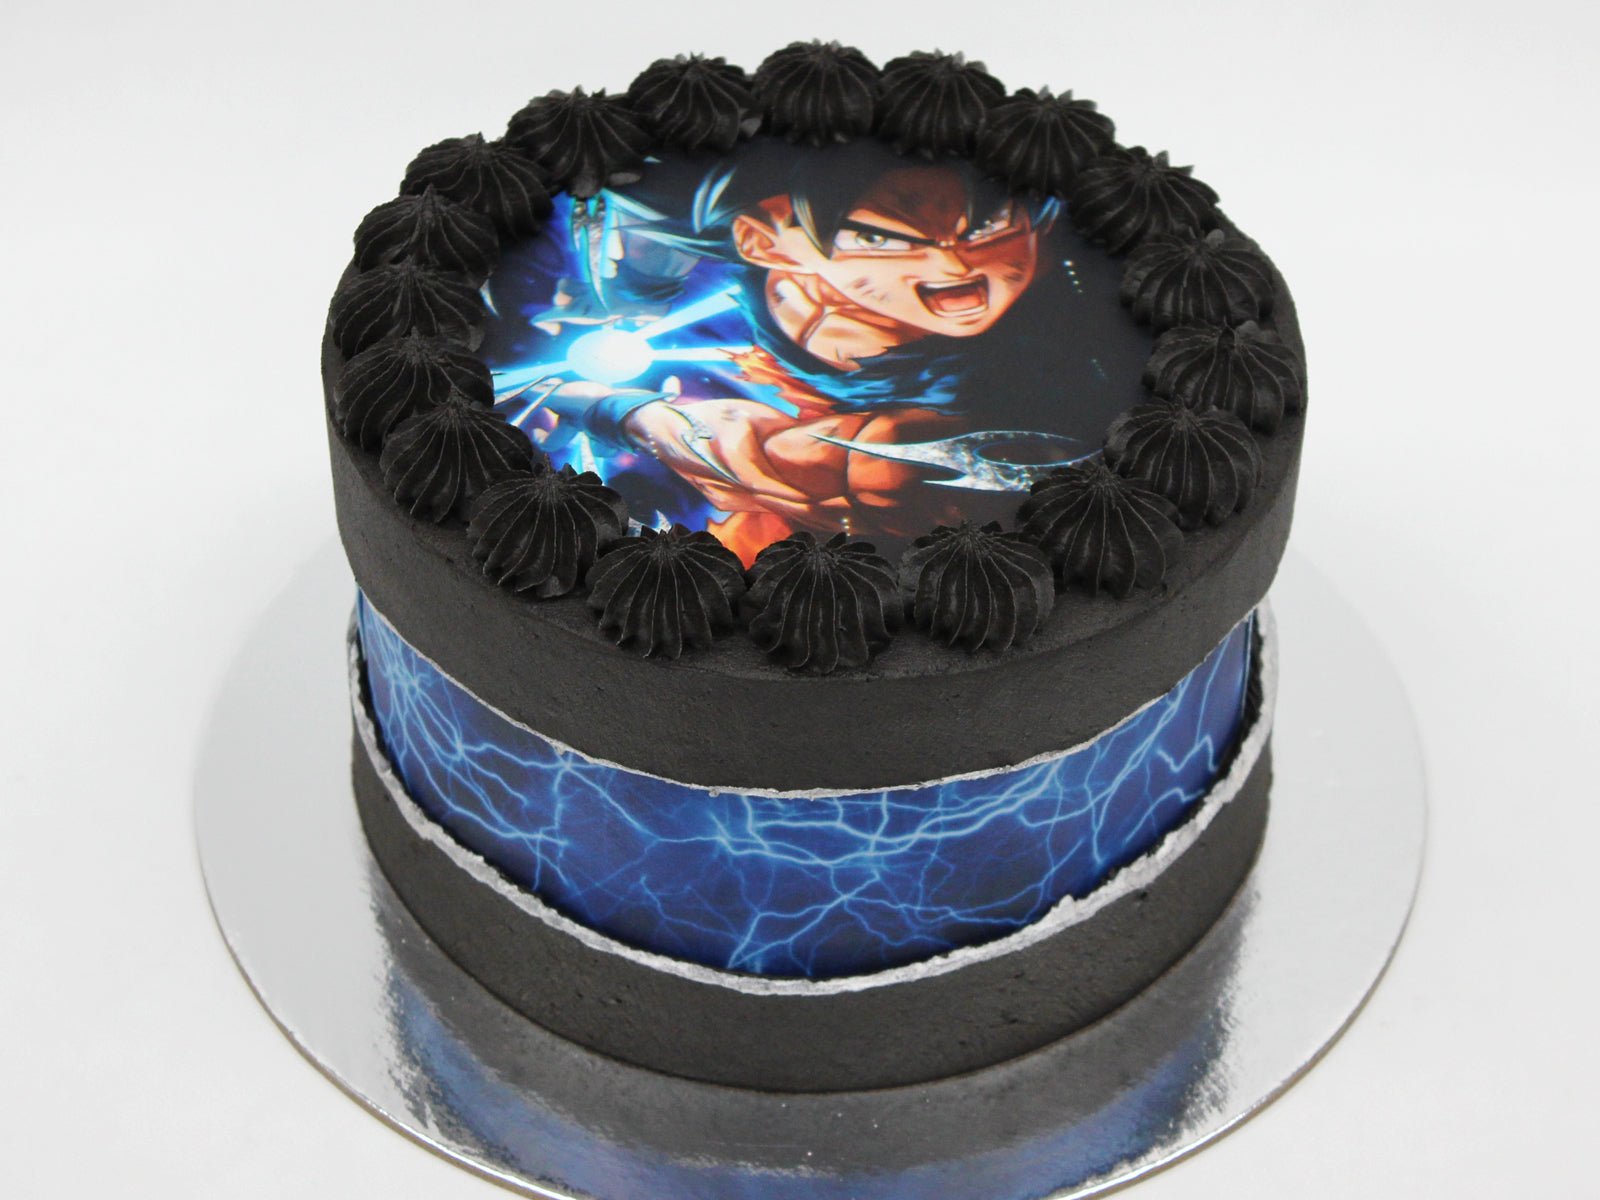 Buy/Send Dragon Ball Birthday Cake Online @ Rs. 2309 - SendBestGift